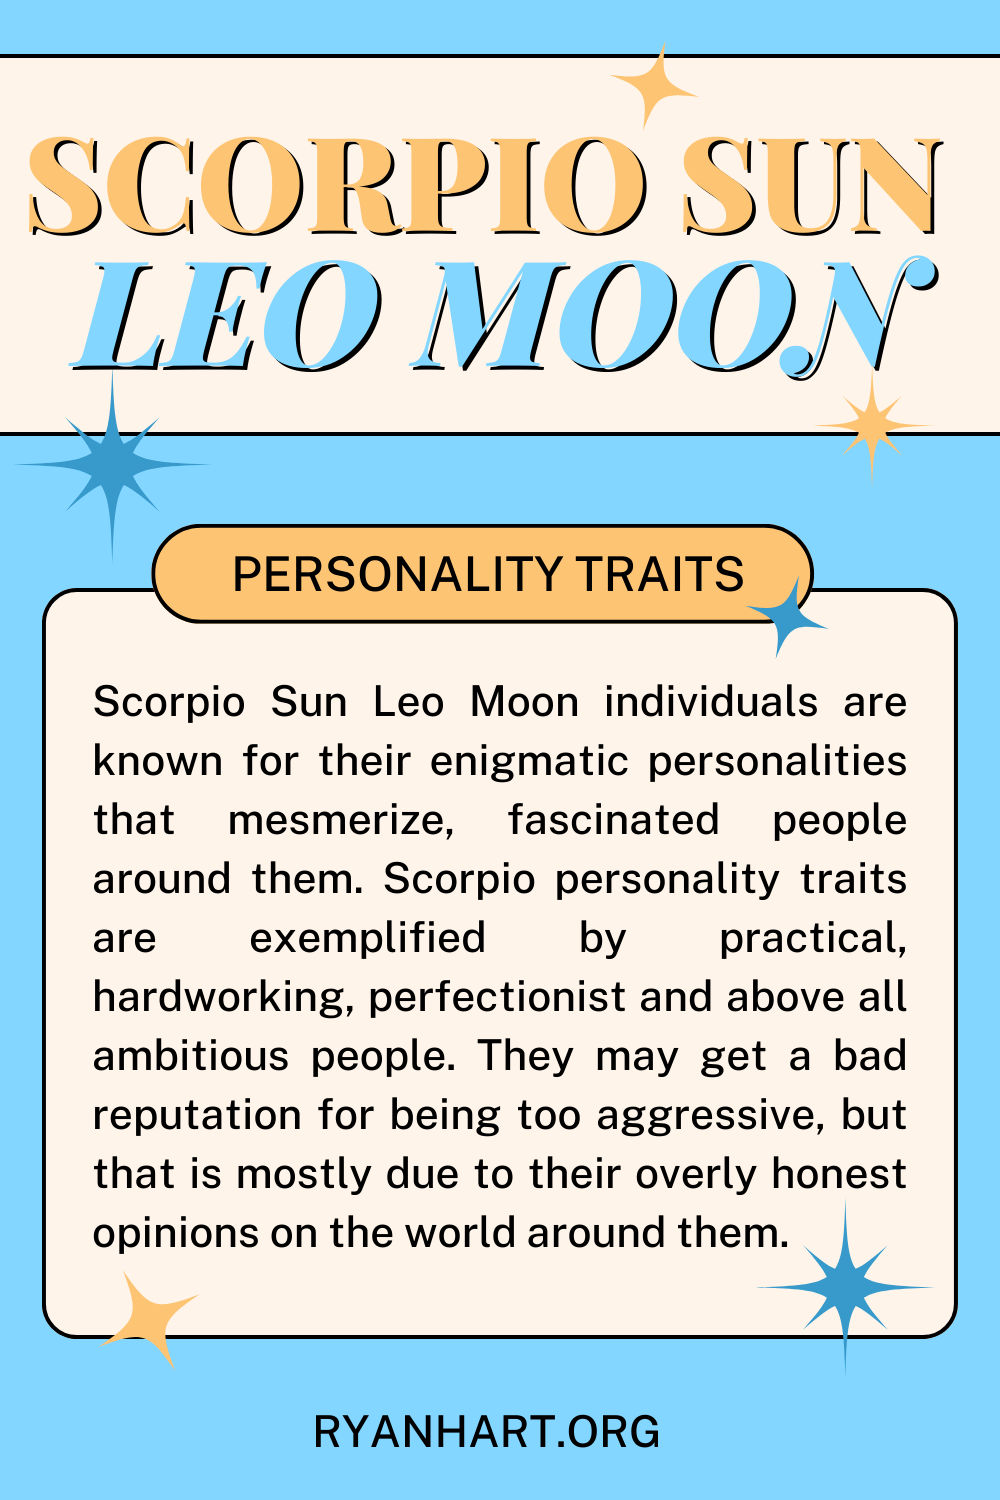 Scorpio Sun Leo Moon Description